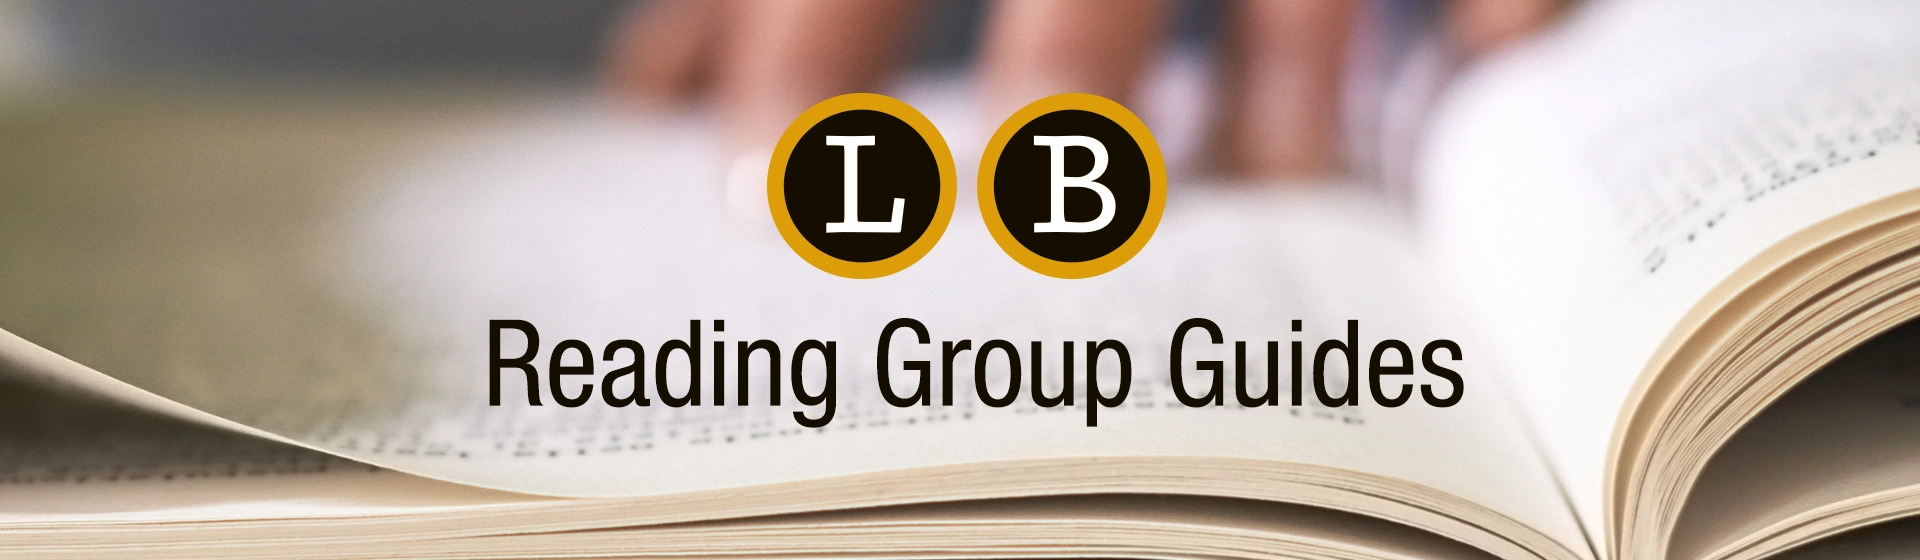 HBGImprints Little Brown Header Reading Group Guides 